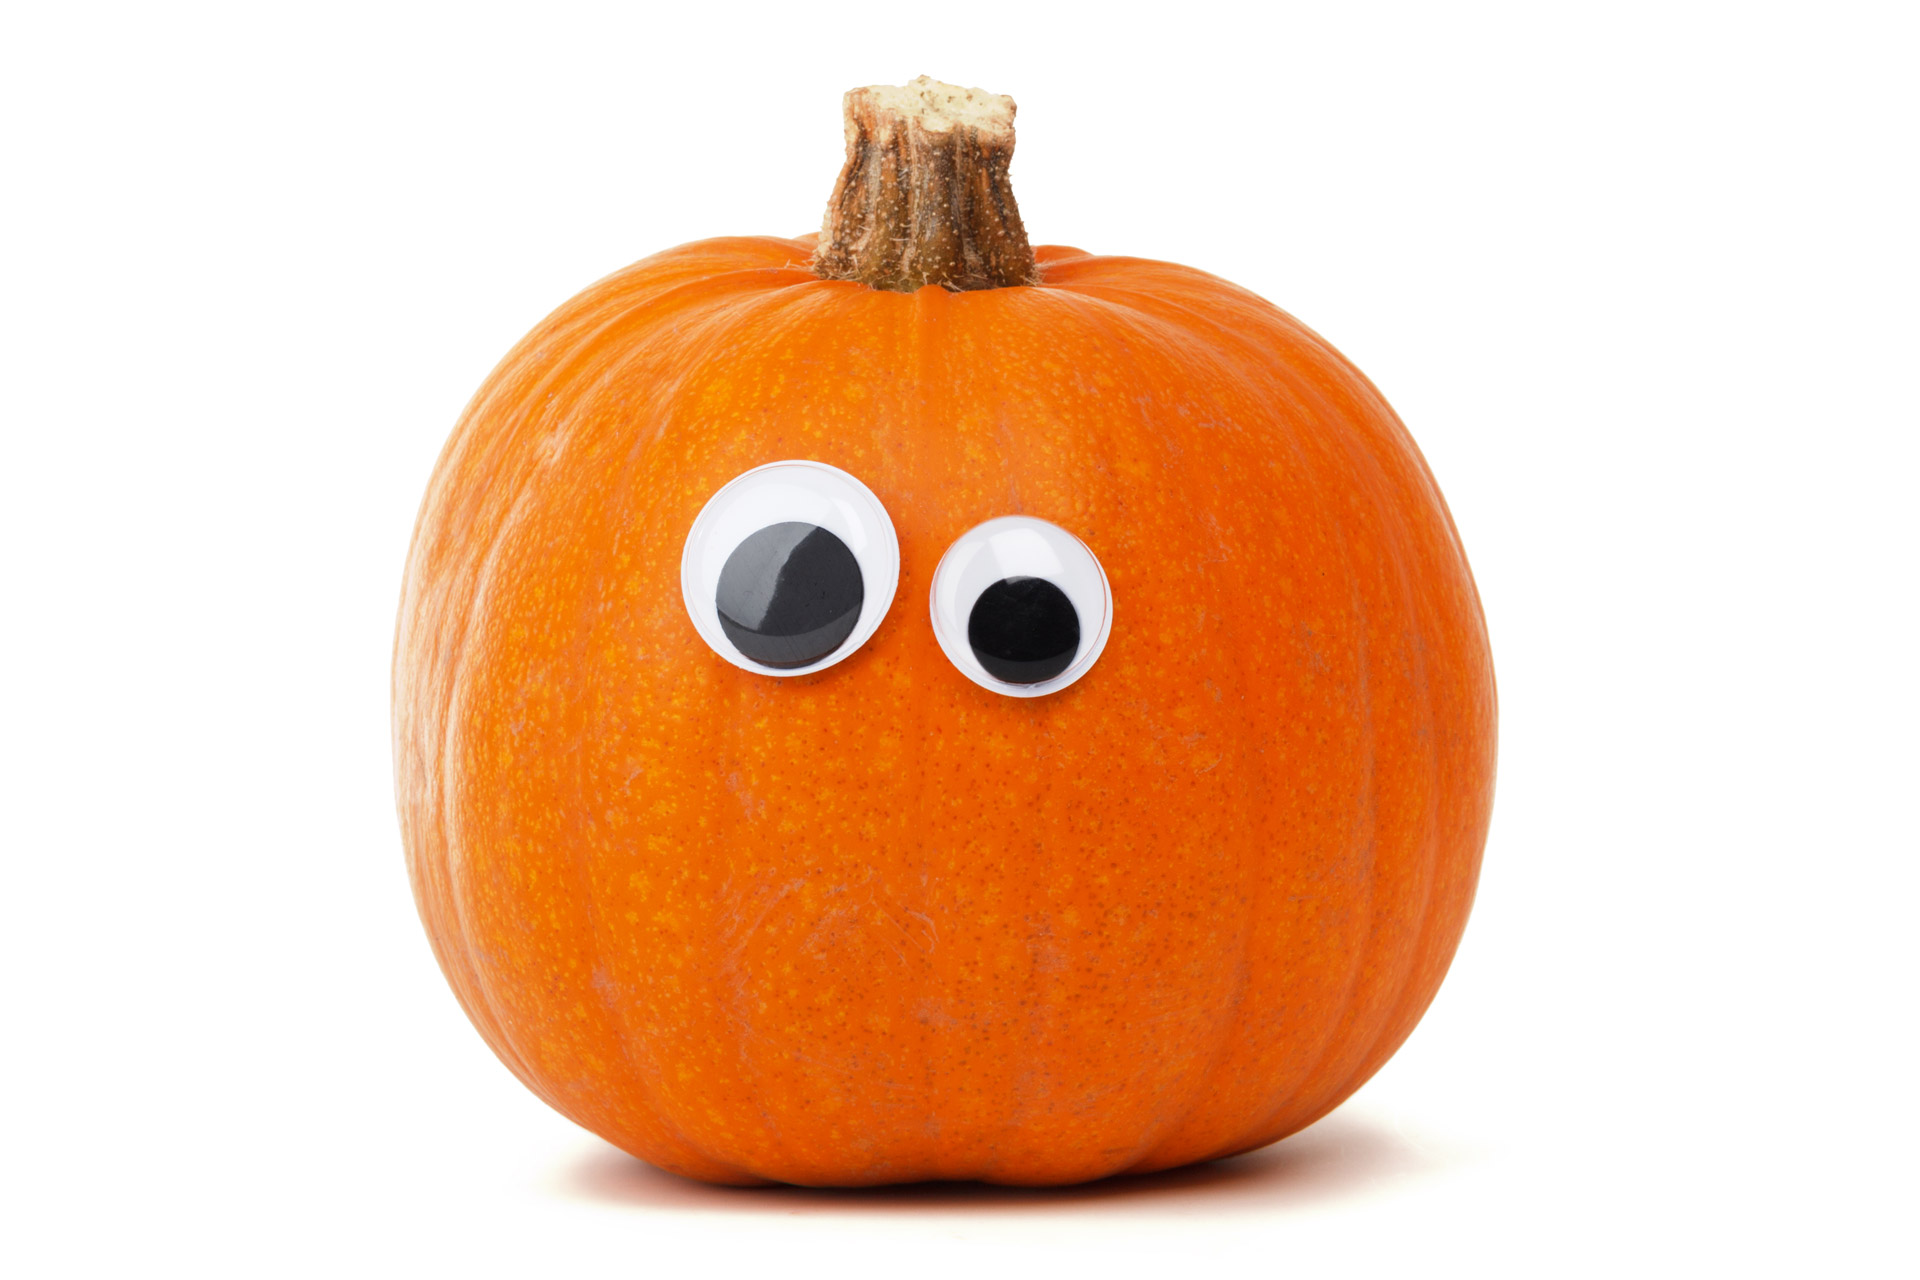 Funny Pumpkin Face by Petr Kratochvil